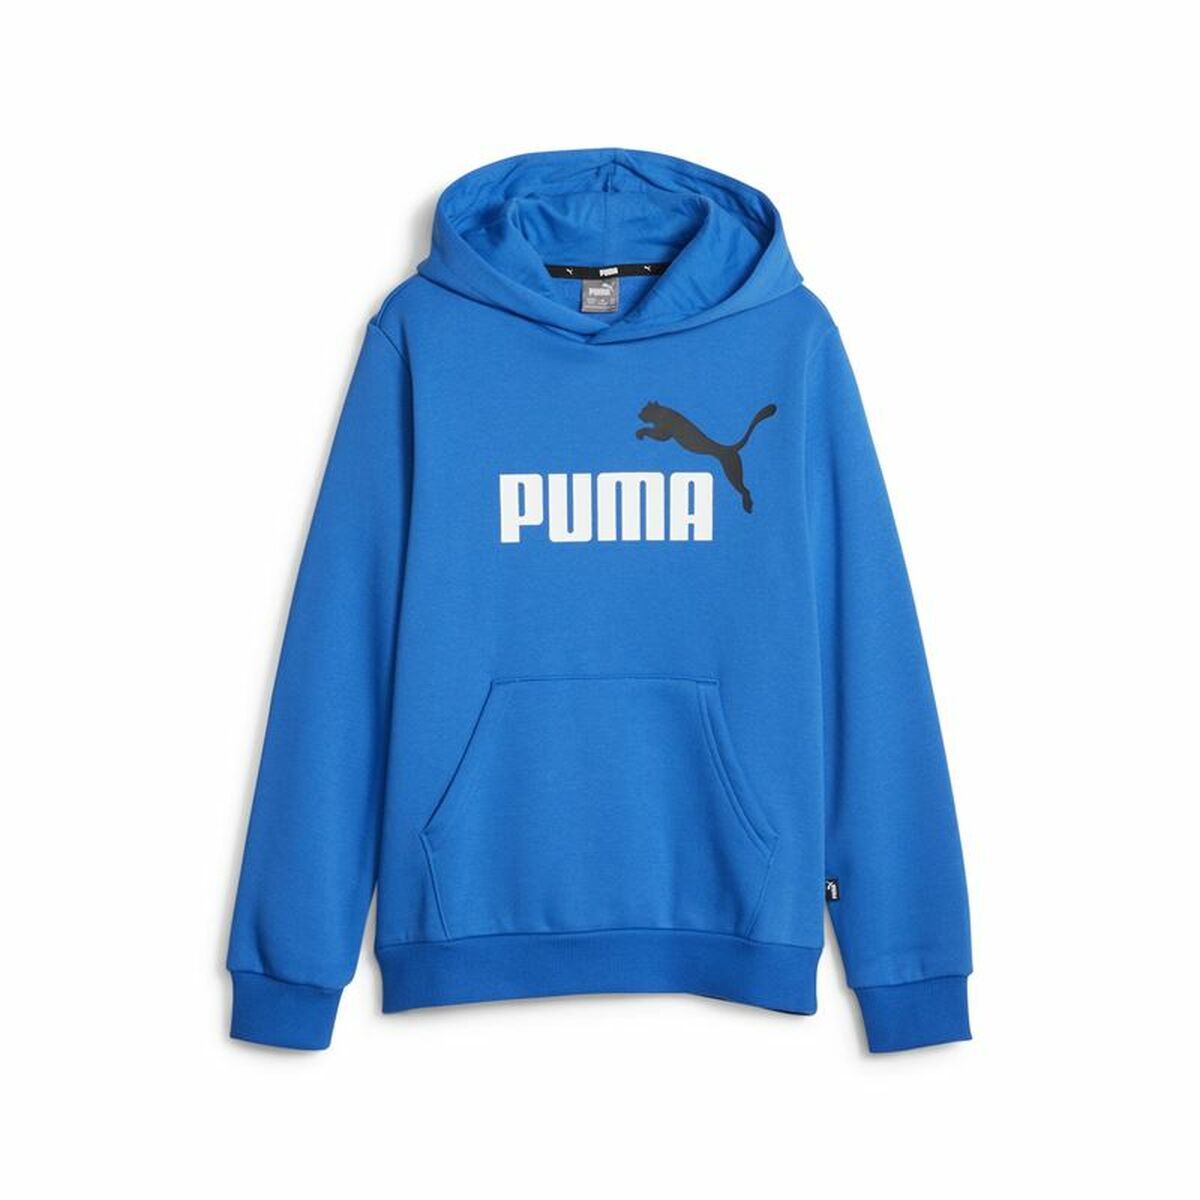 Kaufe Kinder-Sweatshirt Puma Ess+ 2 Col Big Logo Blau bei AWK Flagship um € 52.00